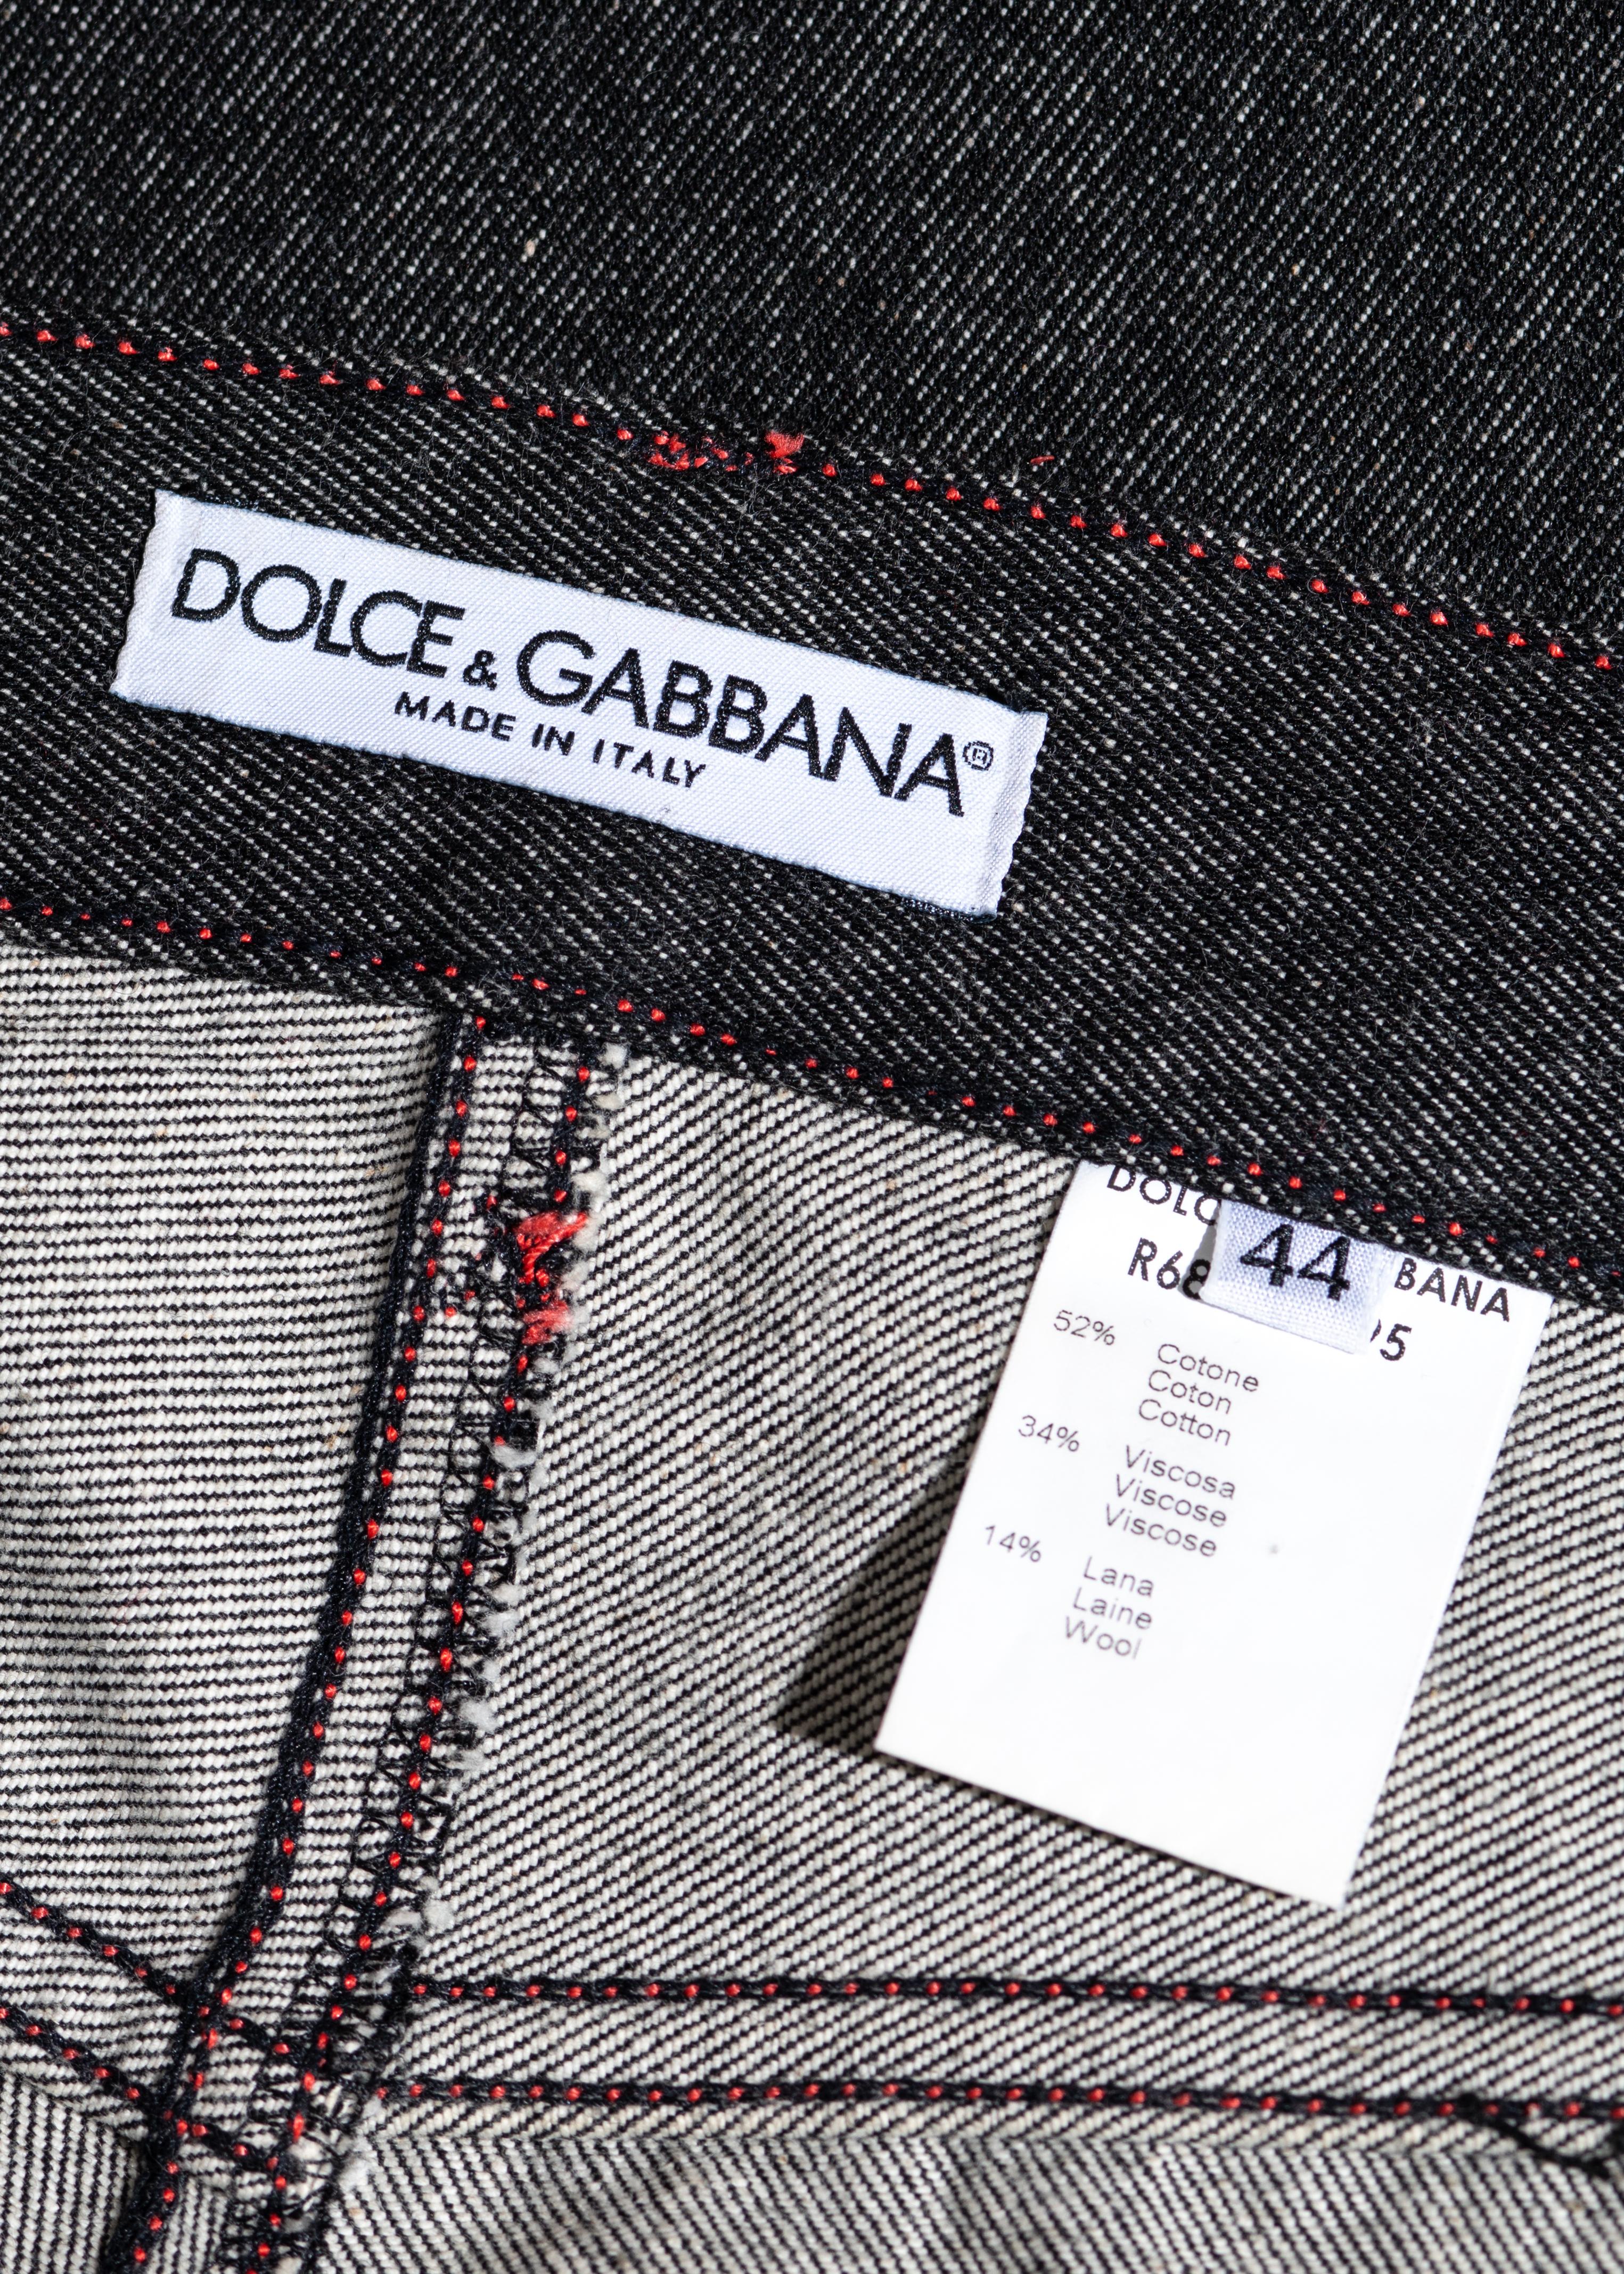 Dolce & Gabbana unisex black denim jeans with brown fur, fw 1999 4